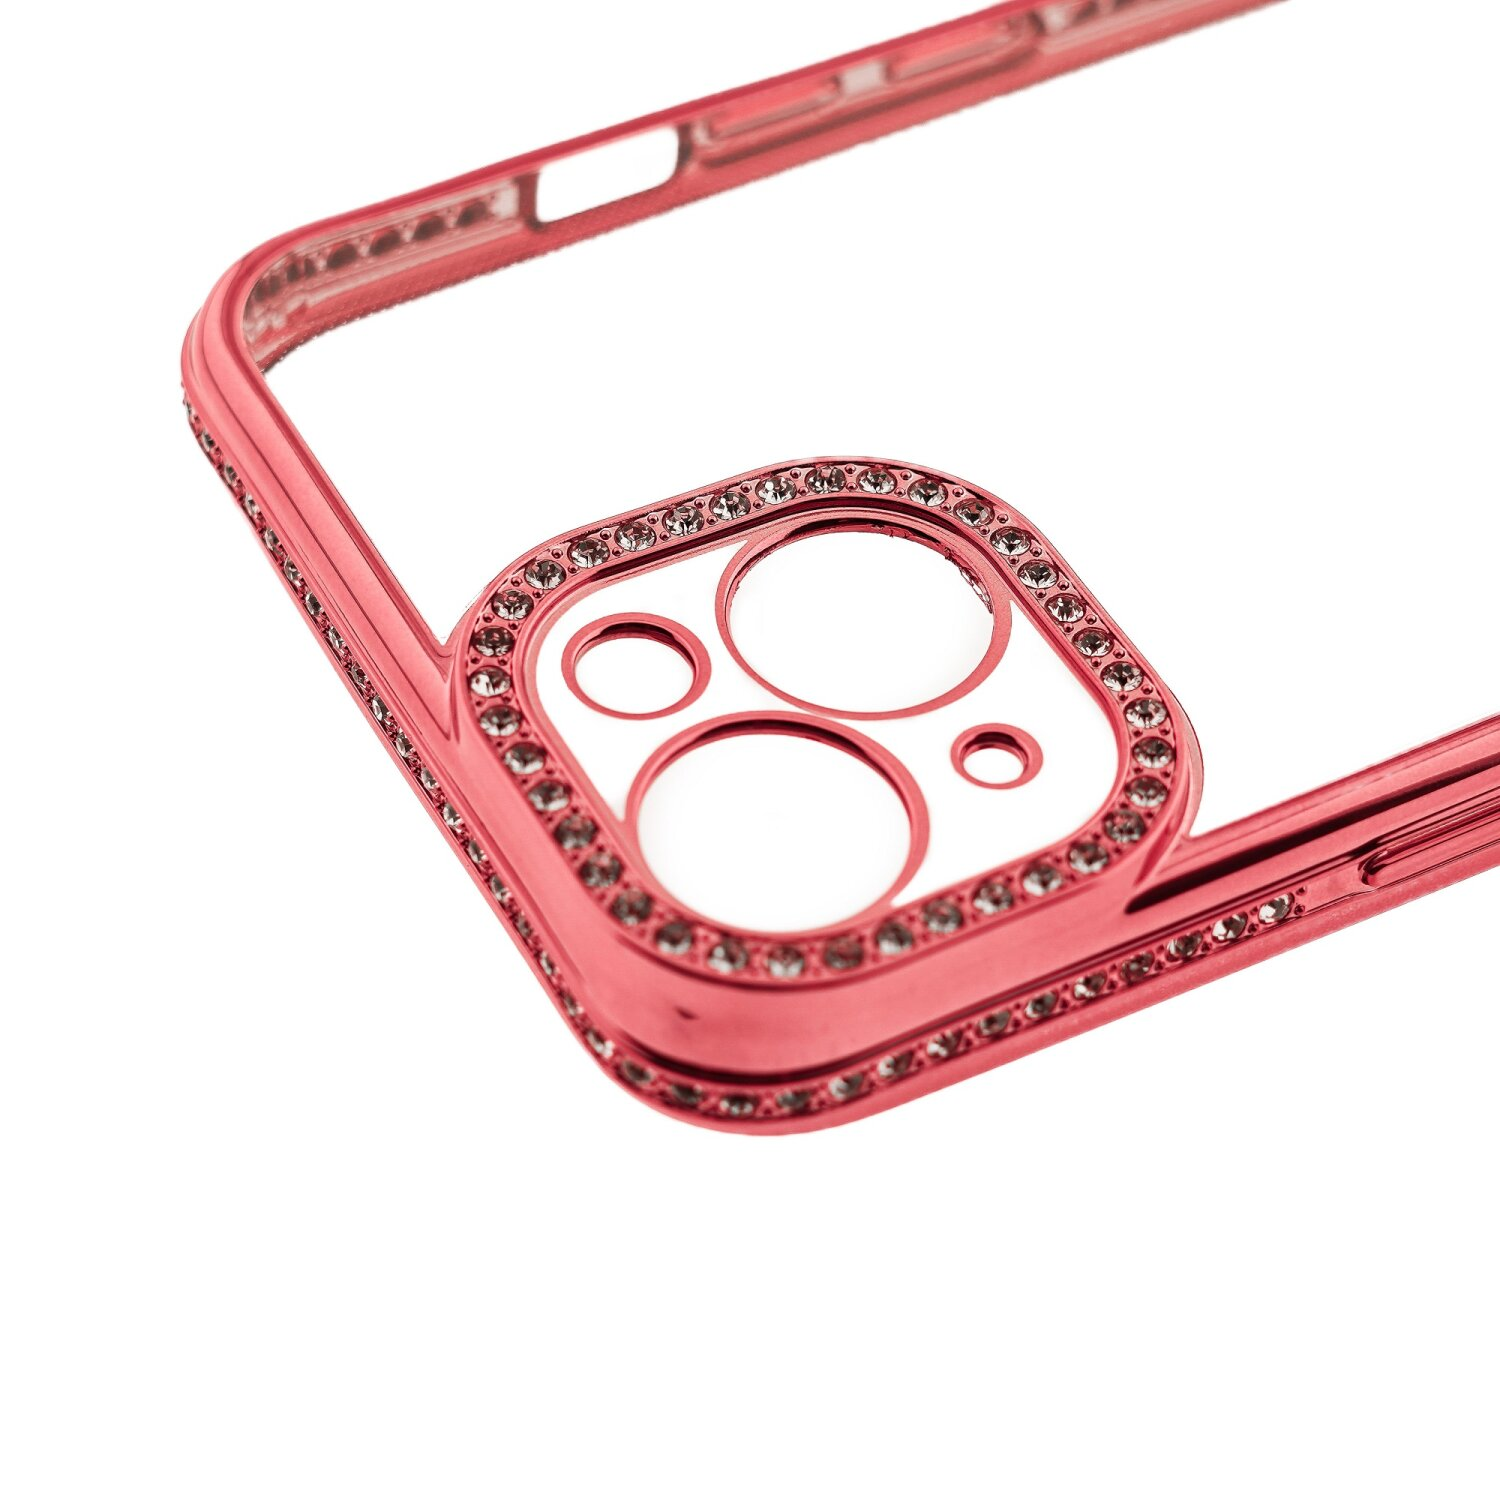 12, Backcover, COFI Diamond Apple, Pink iPhone Hülle,